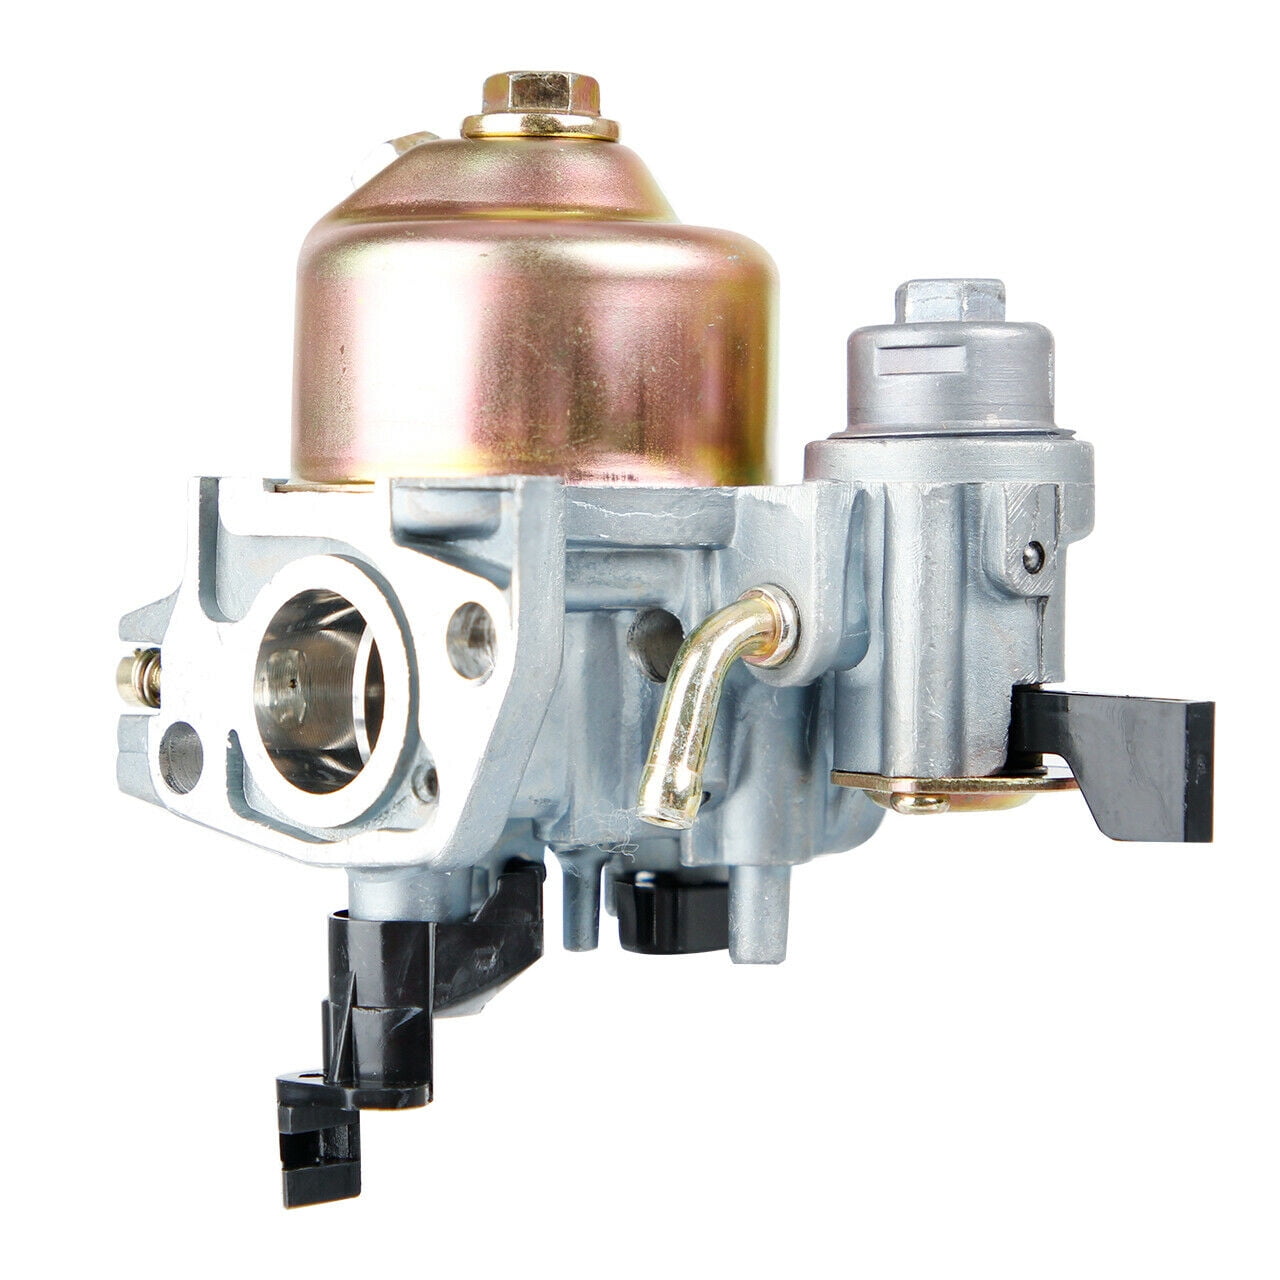 Details about   Carburetor Honda GX160 5.5hp GX200 6.5hp Generator Lawn Mower Water Pump Carb 